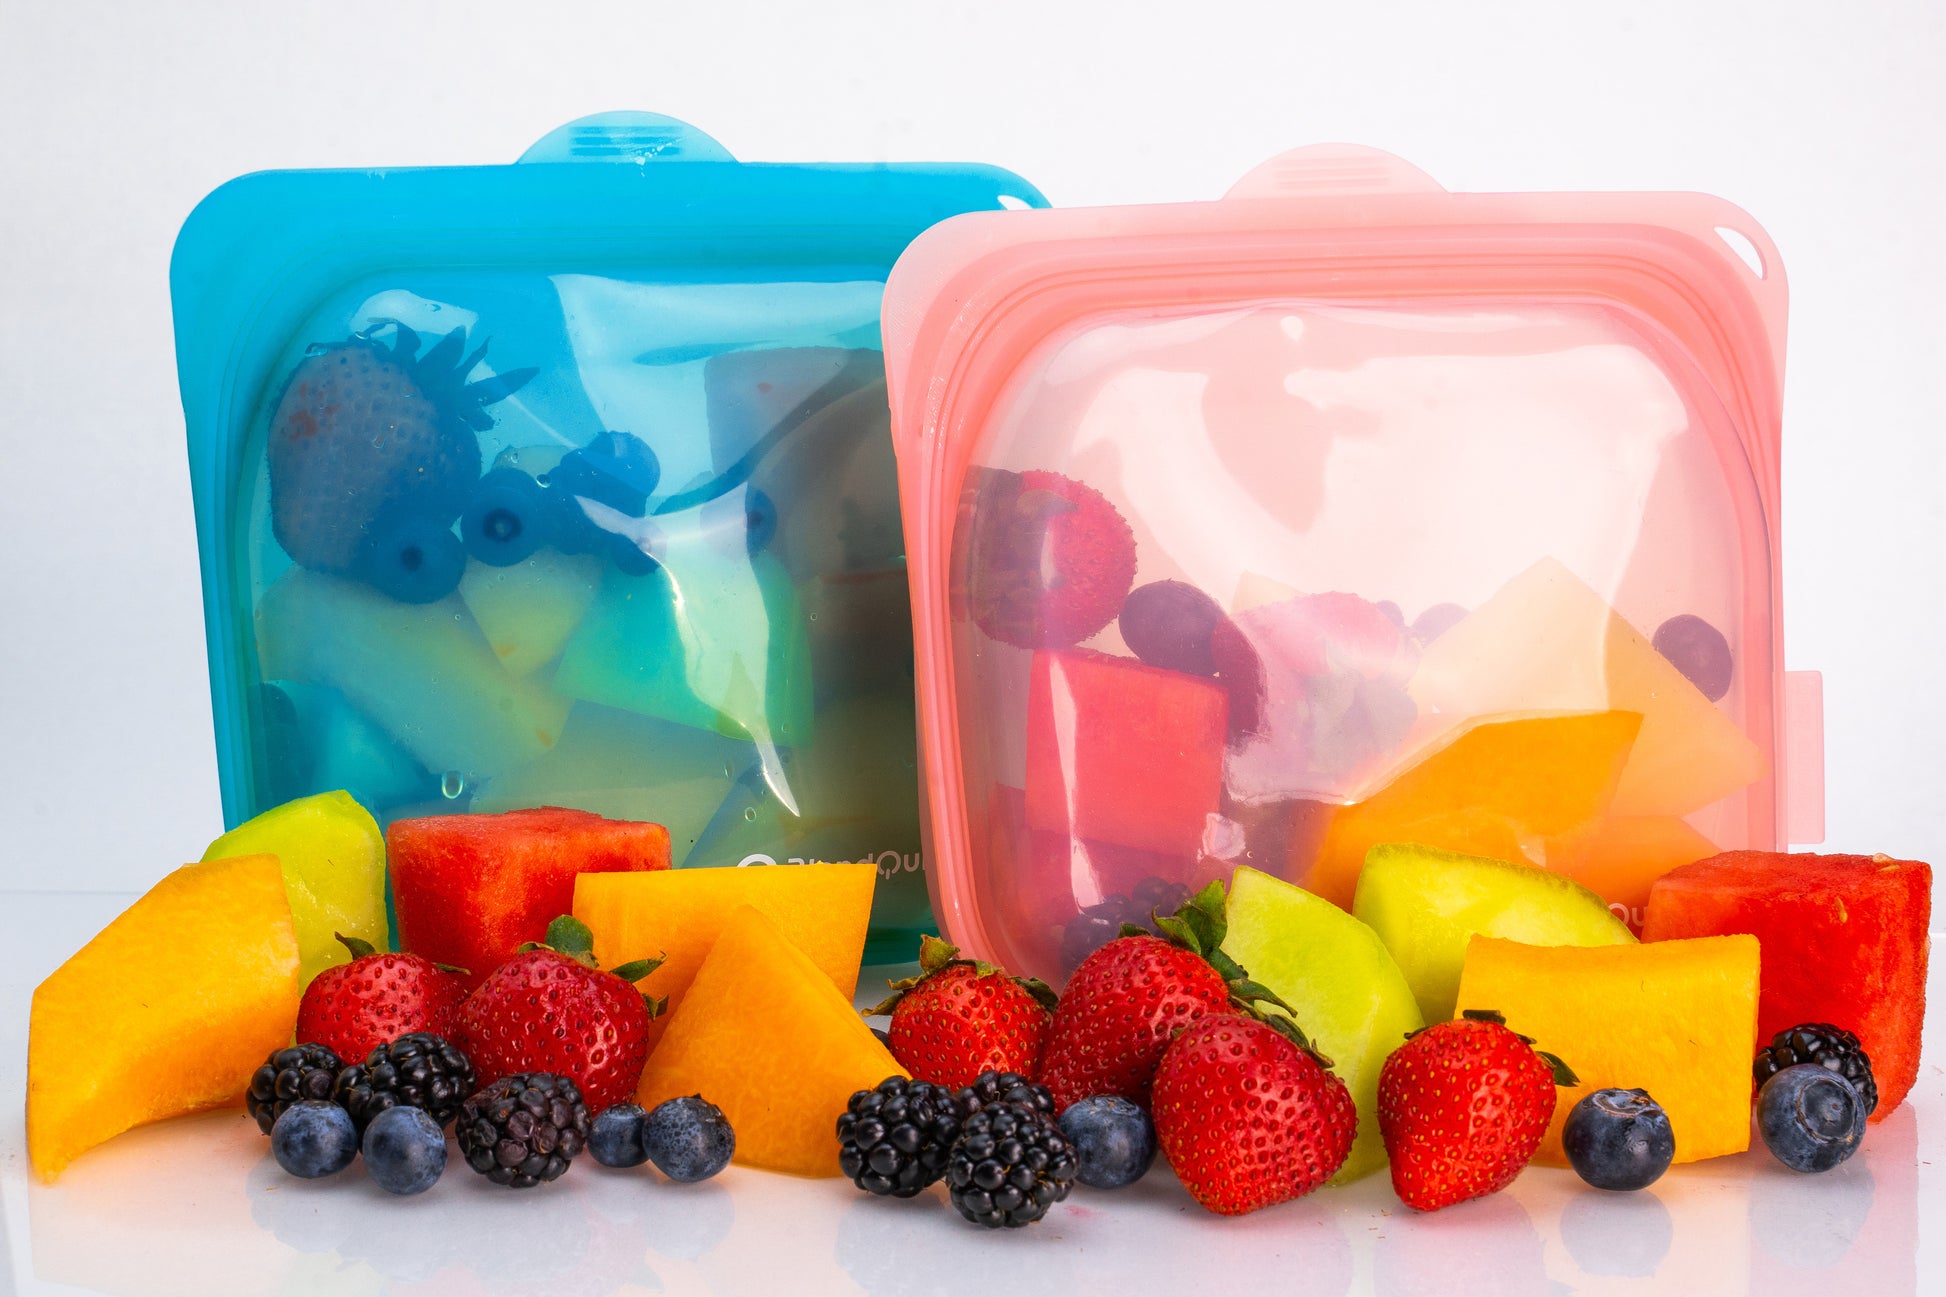 Eco-Friendly Reusable Silicone Food Storage Bags - BPA Free